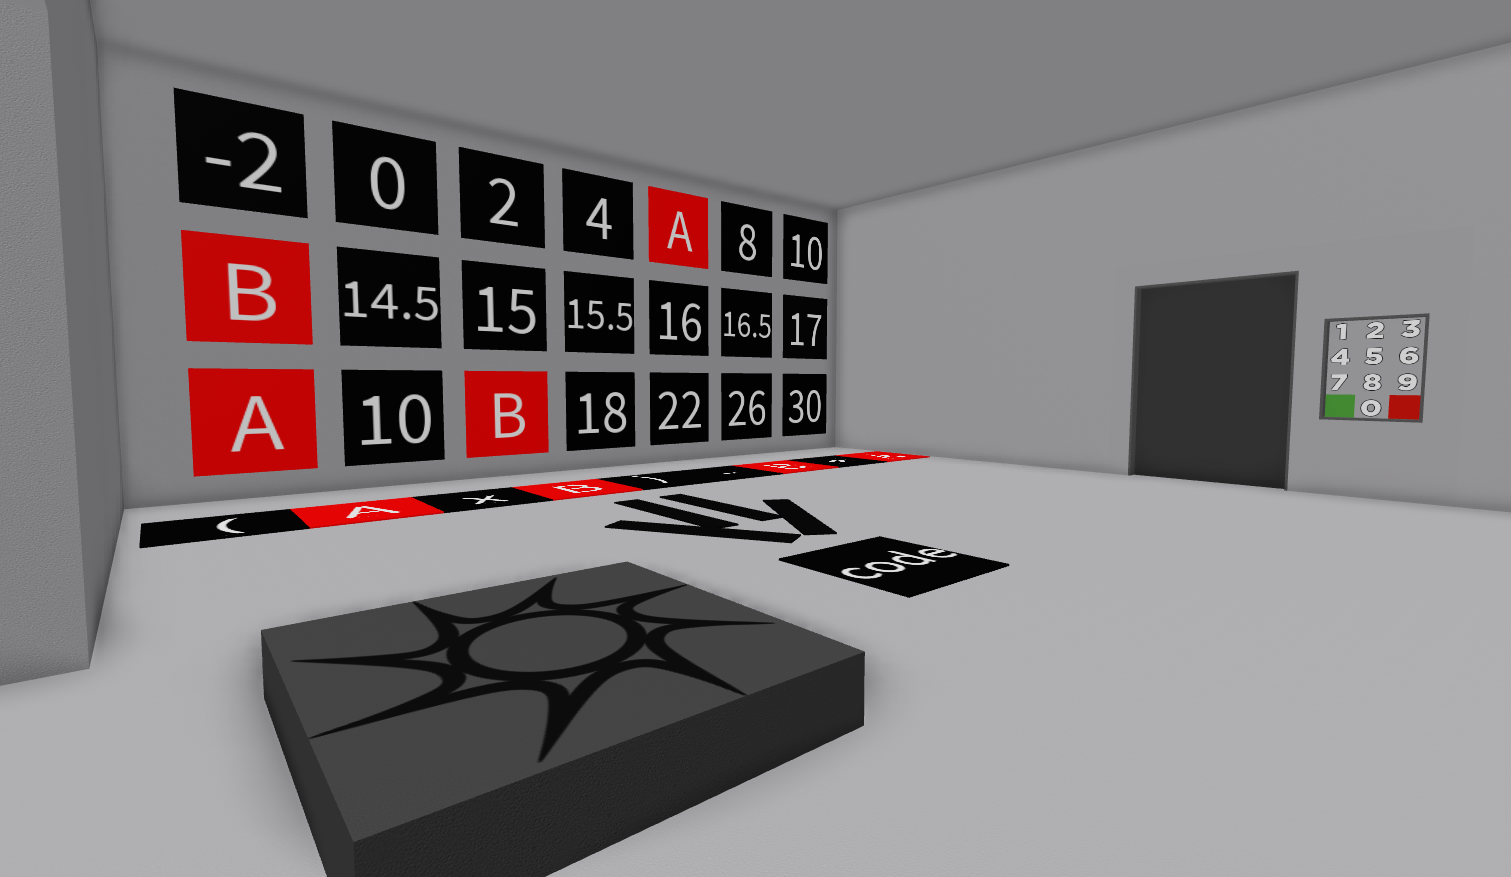 Room 61 Untitled Door Game Wiki Fandom - untitled door game roblox answers 18